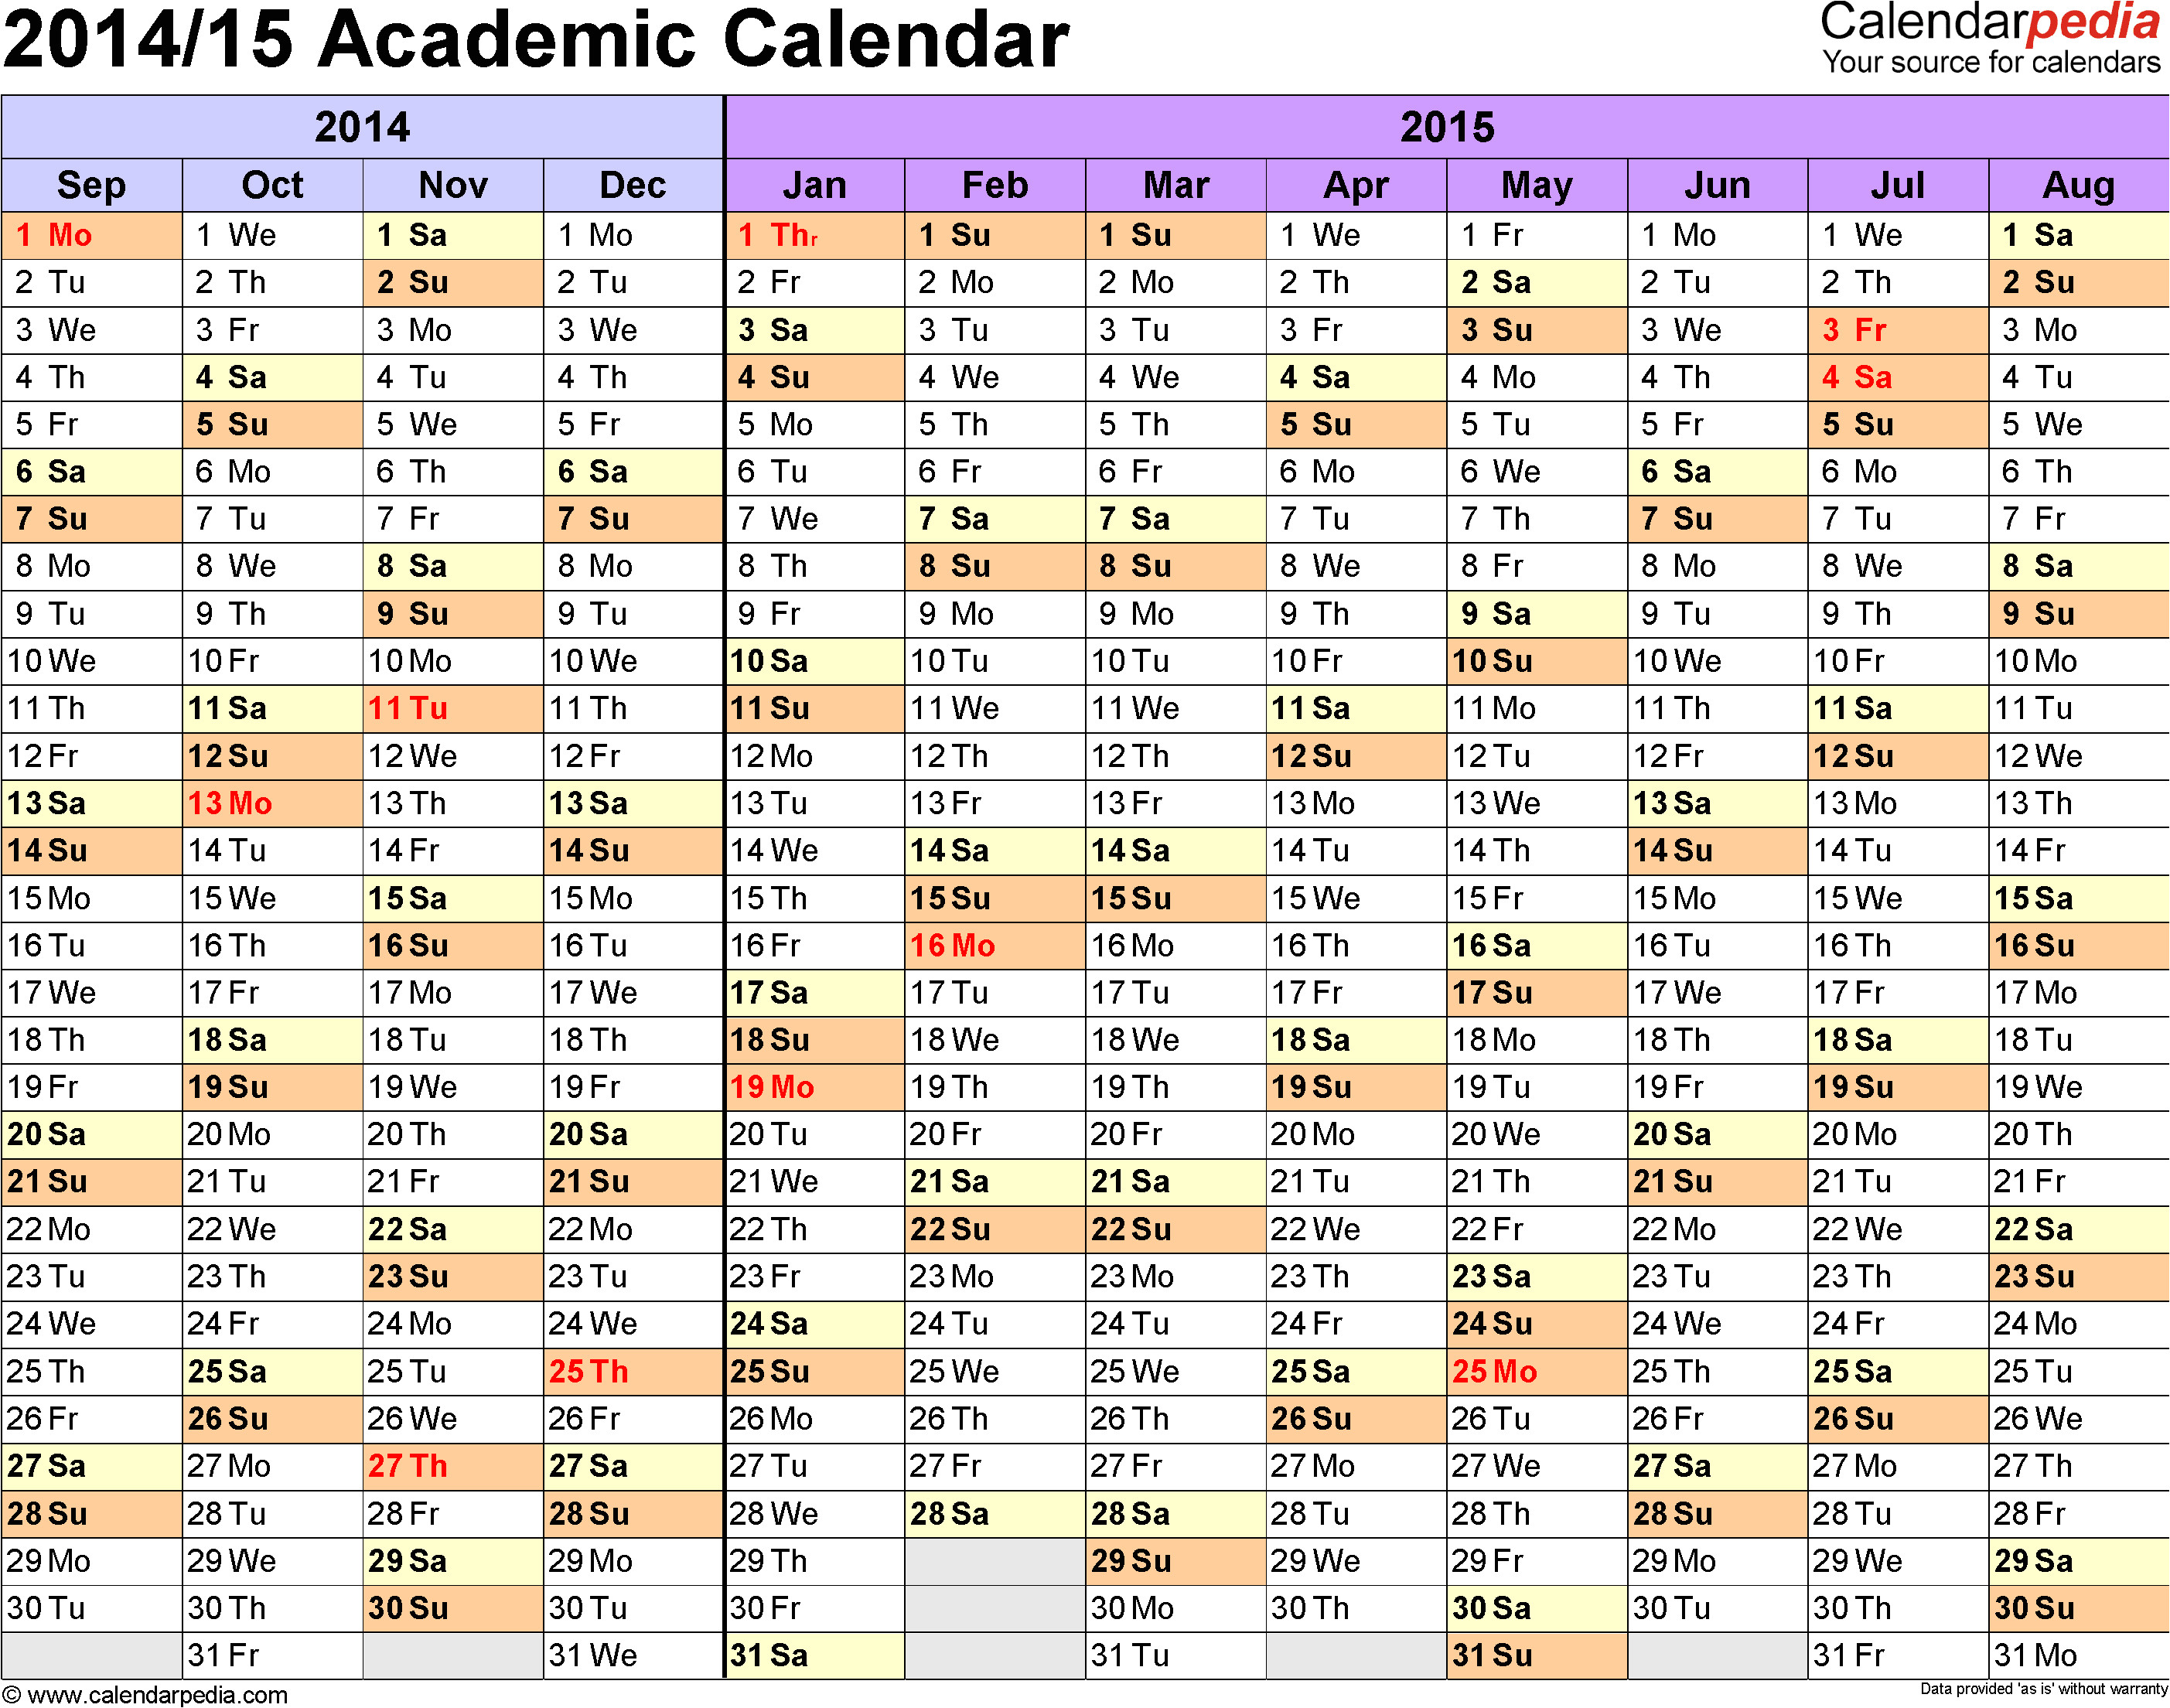 academic calendar 2014 2015 word templates